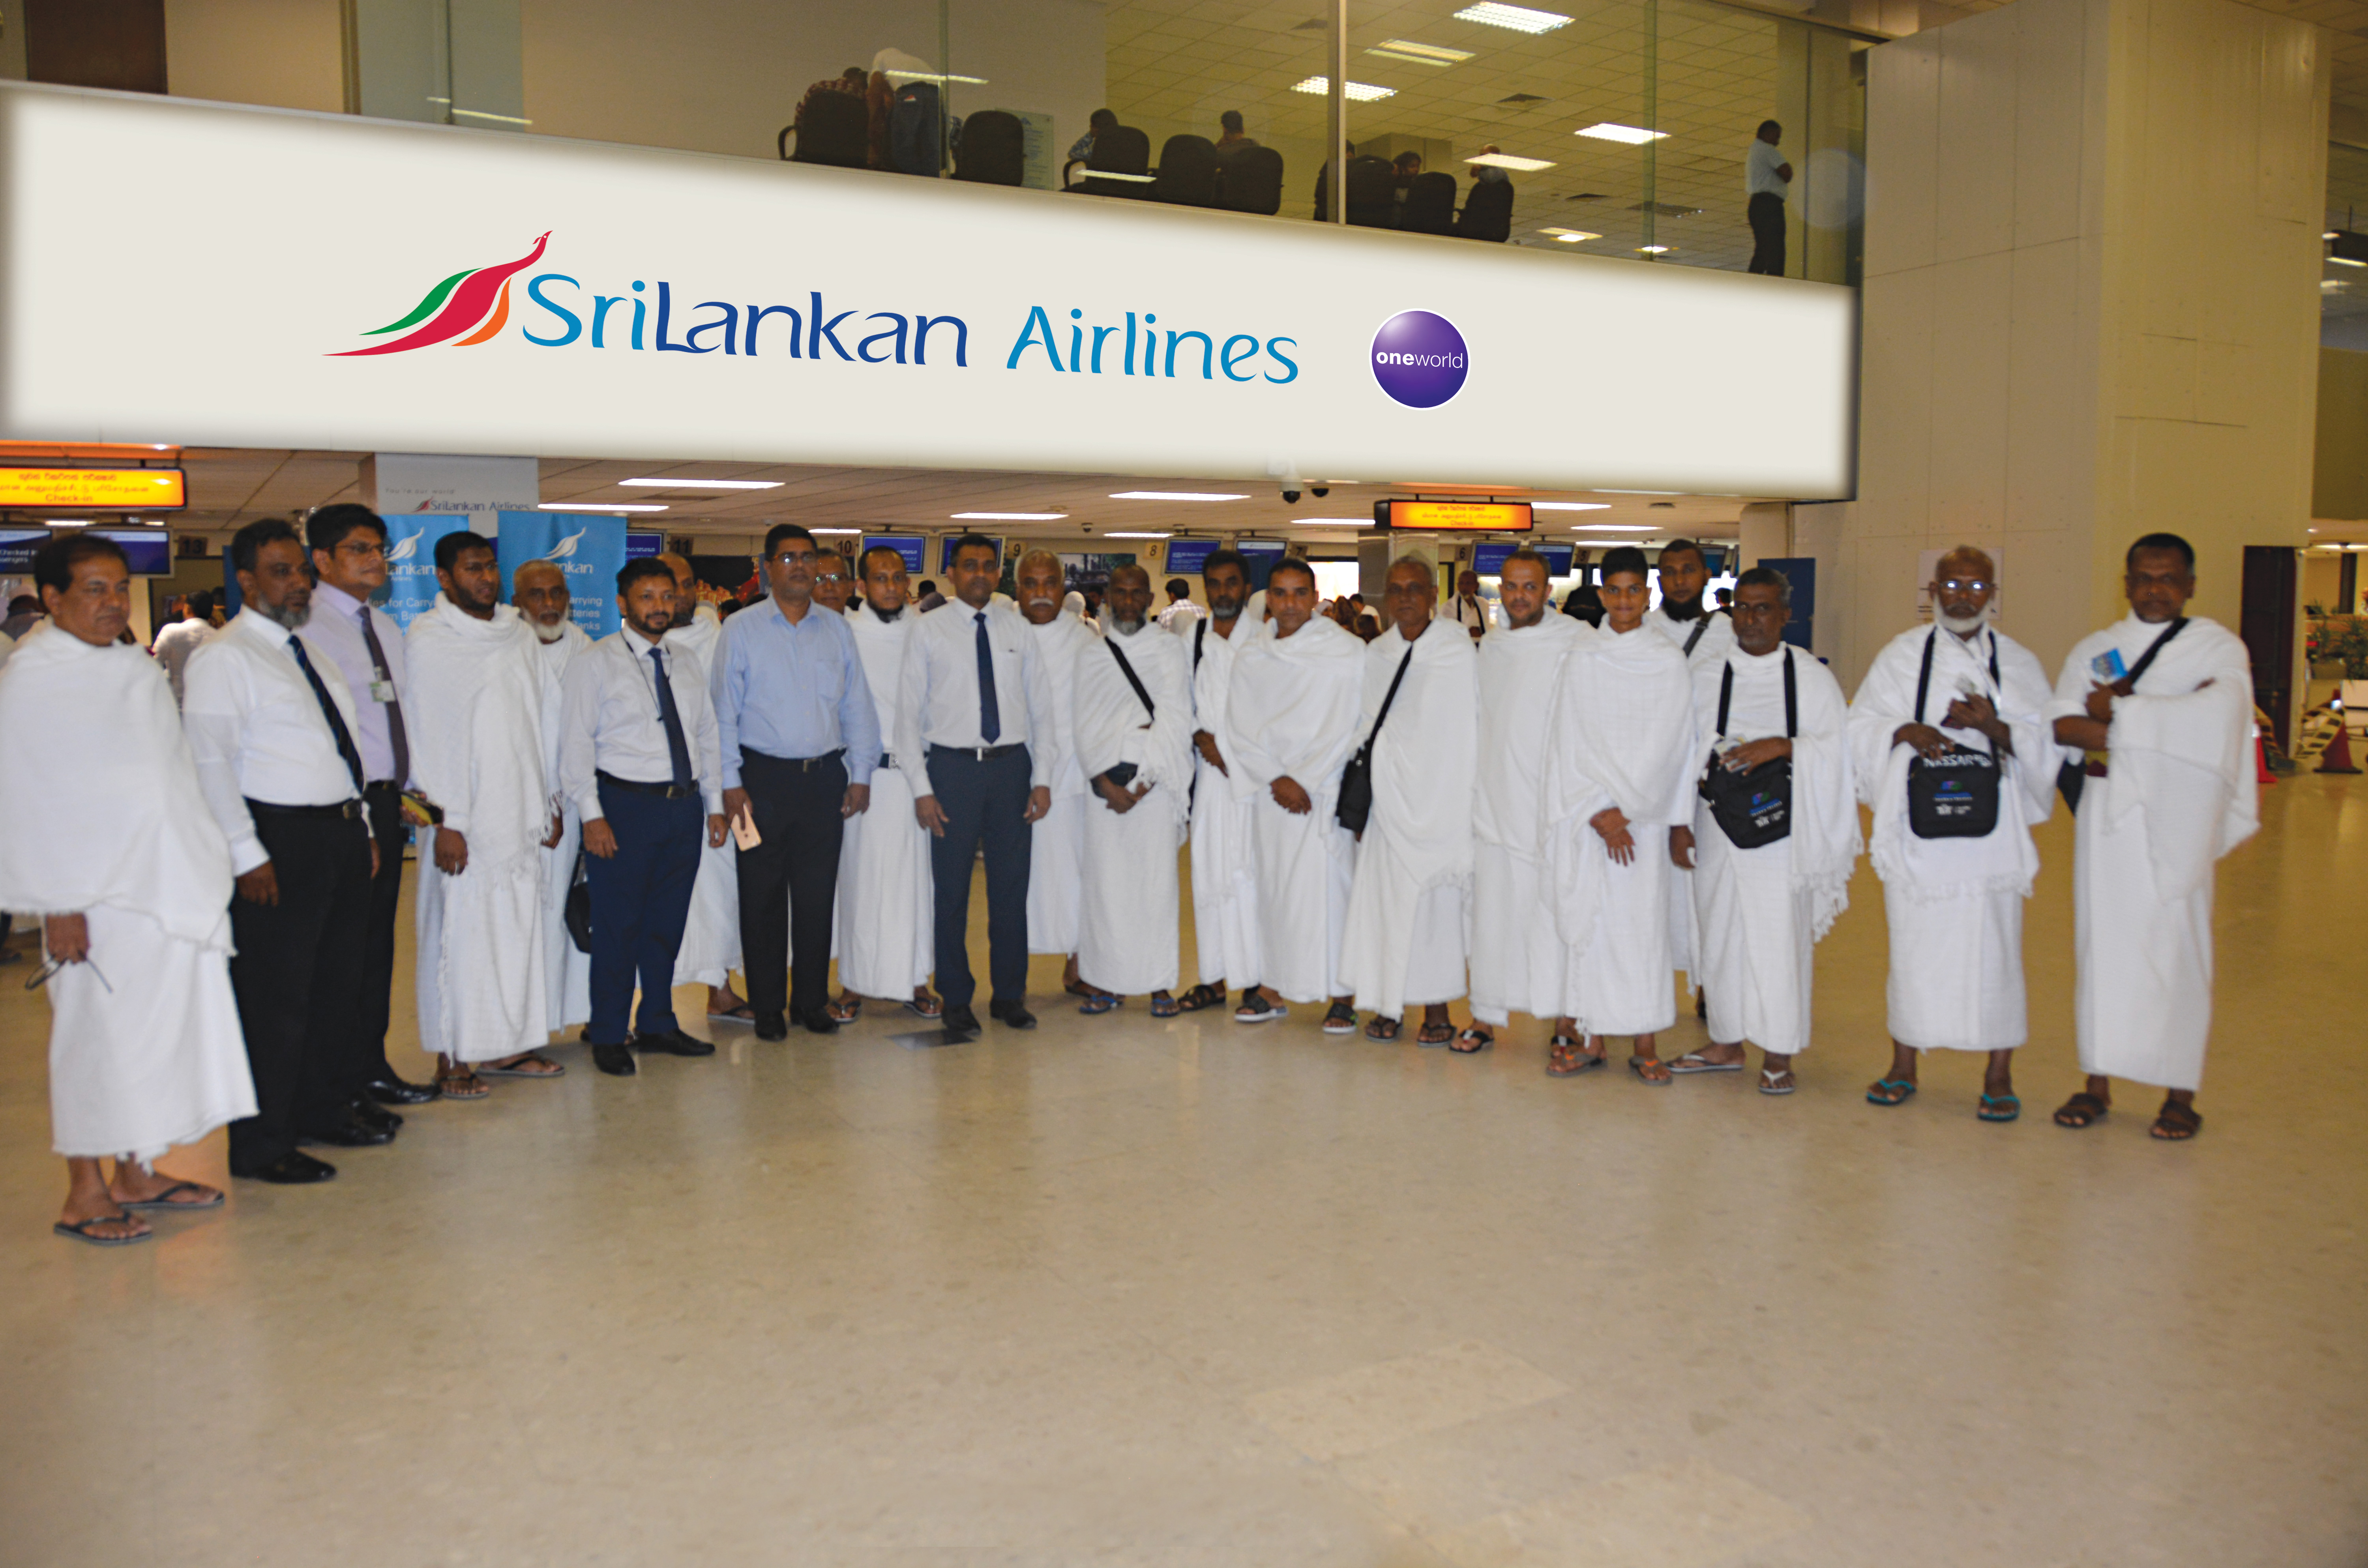 SriLankan Airlines’ first group of pilgrims this Hajj season